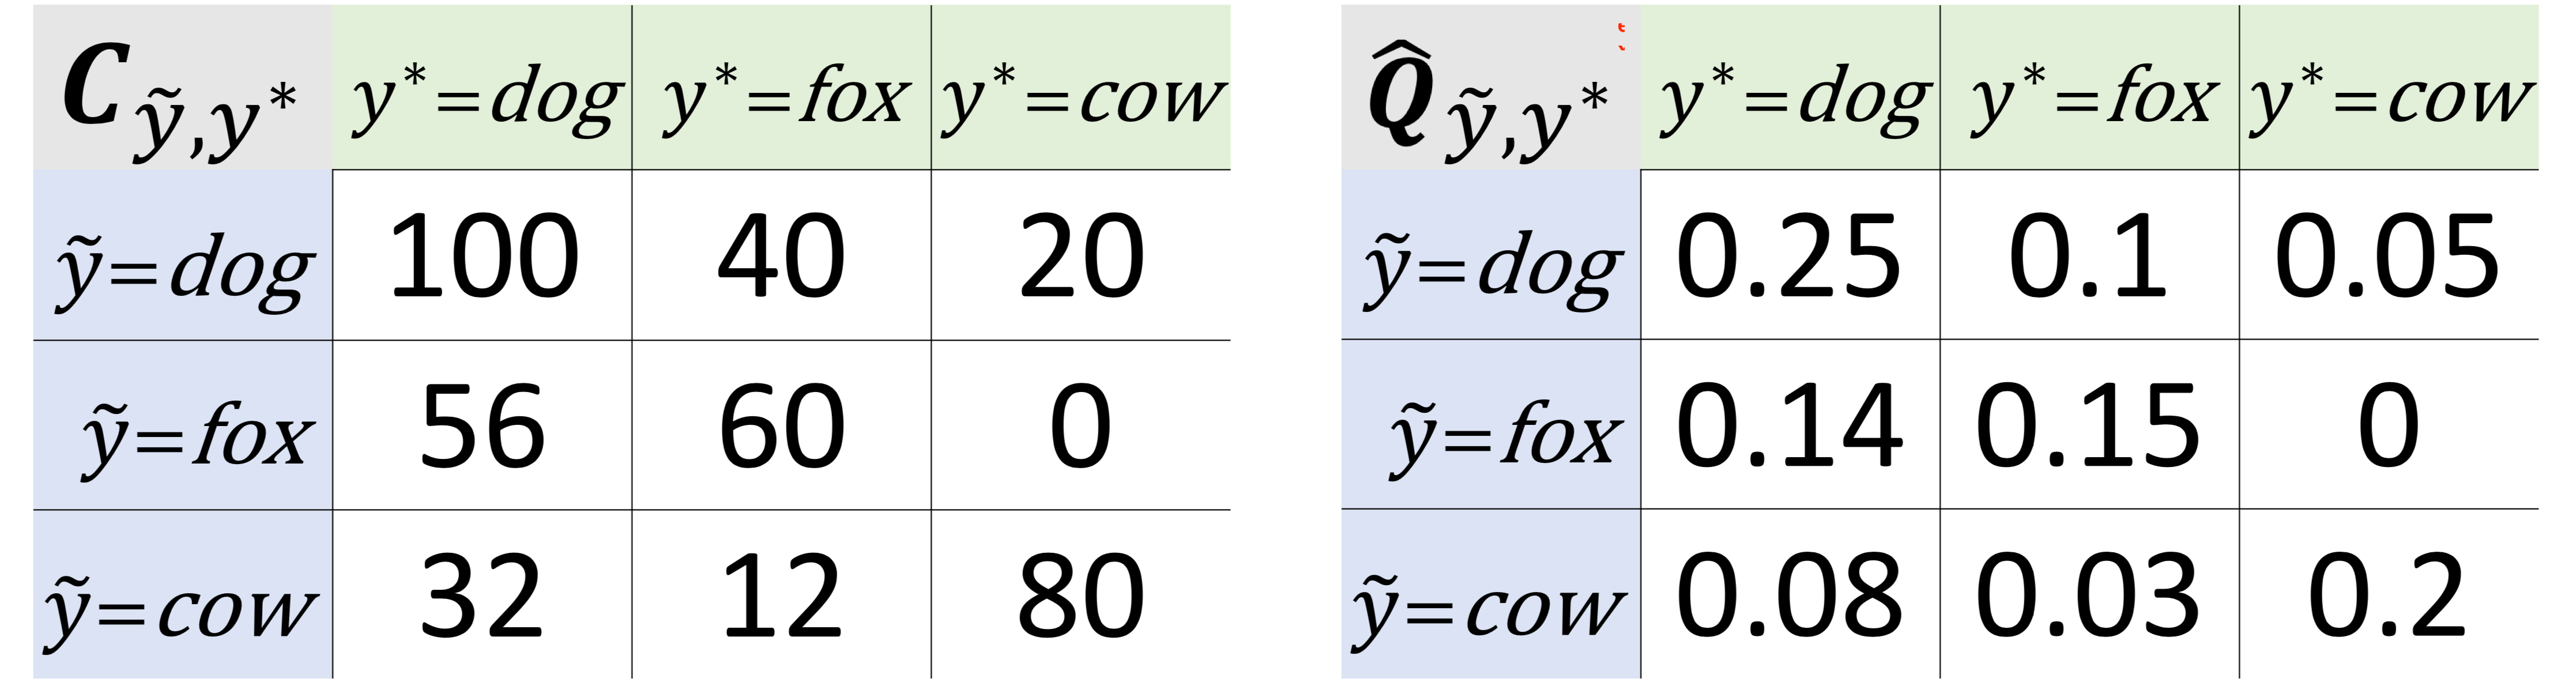 Example matrices